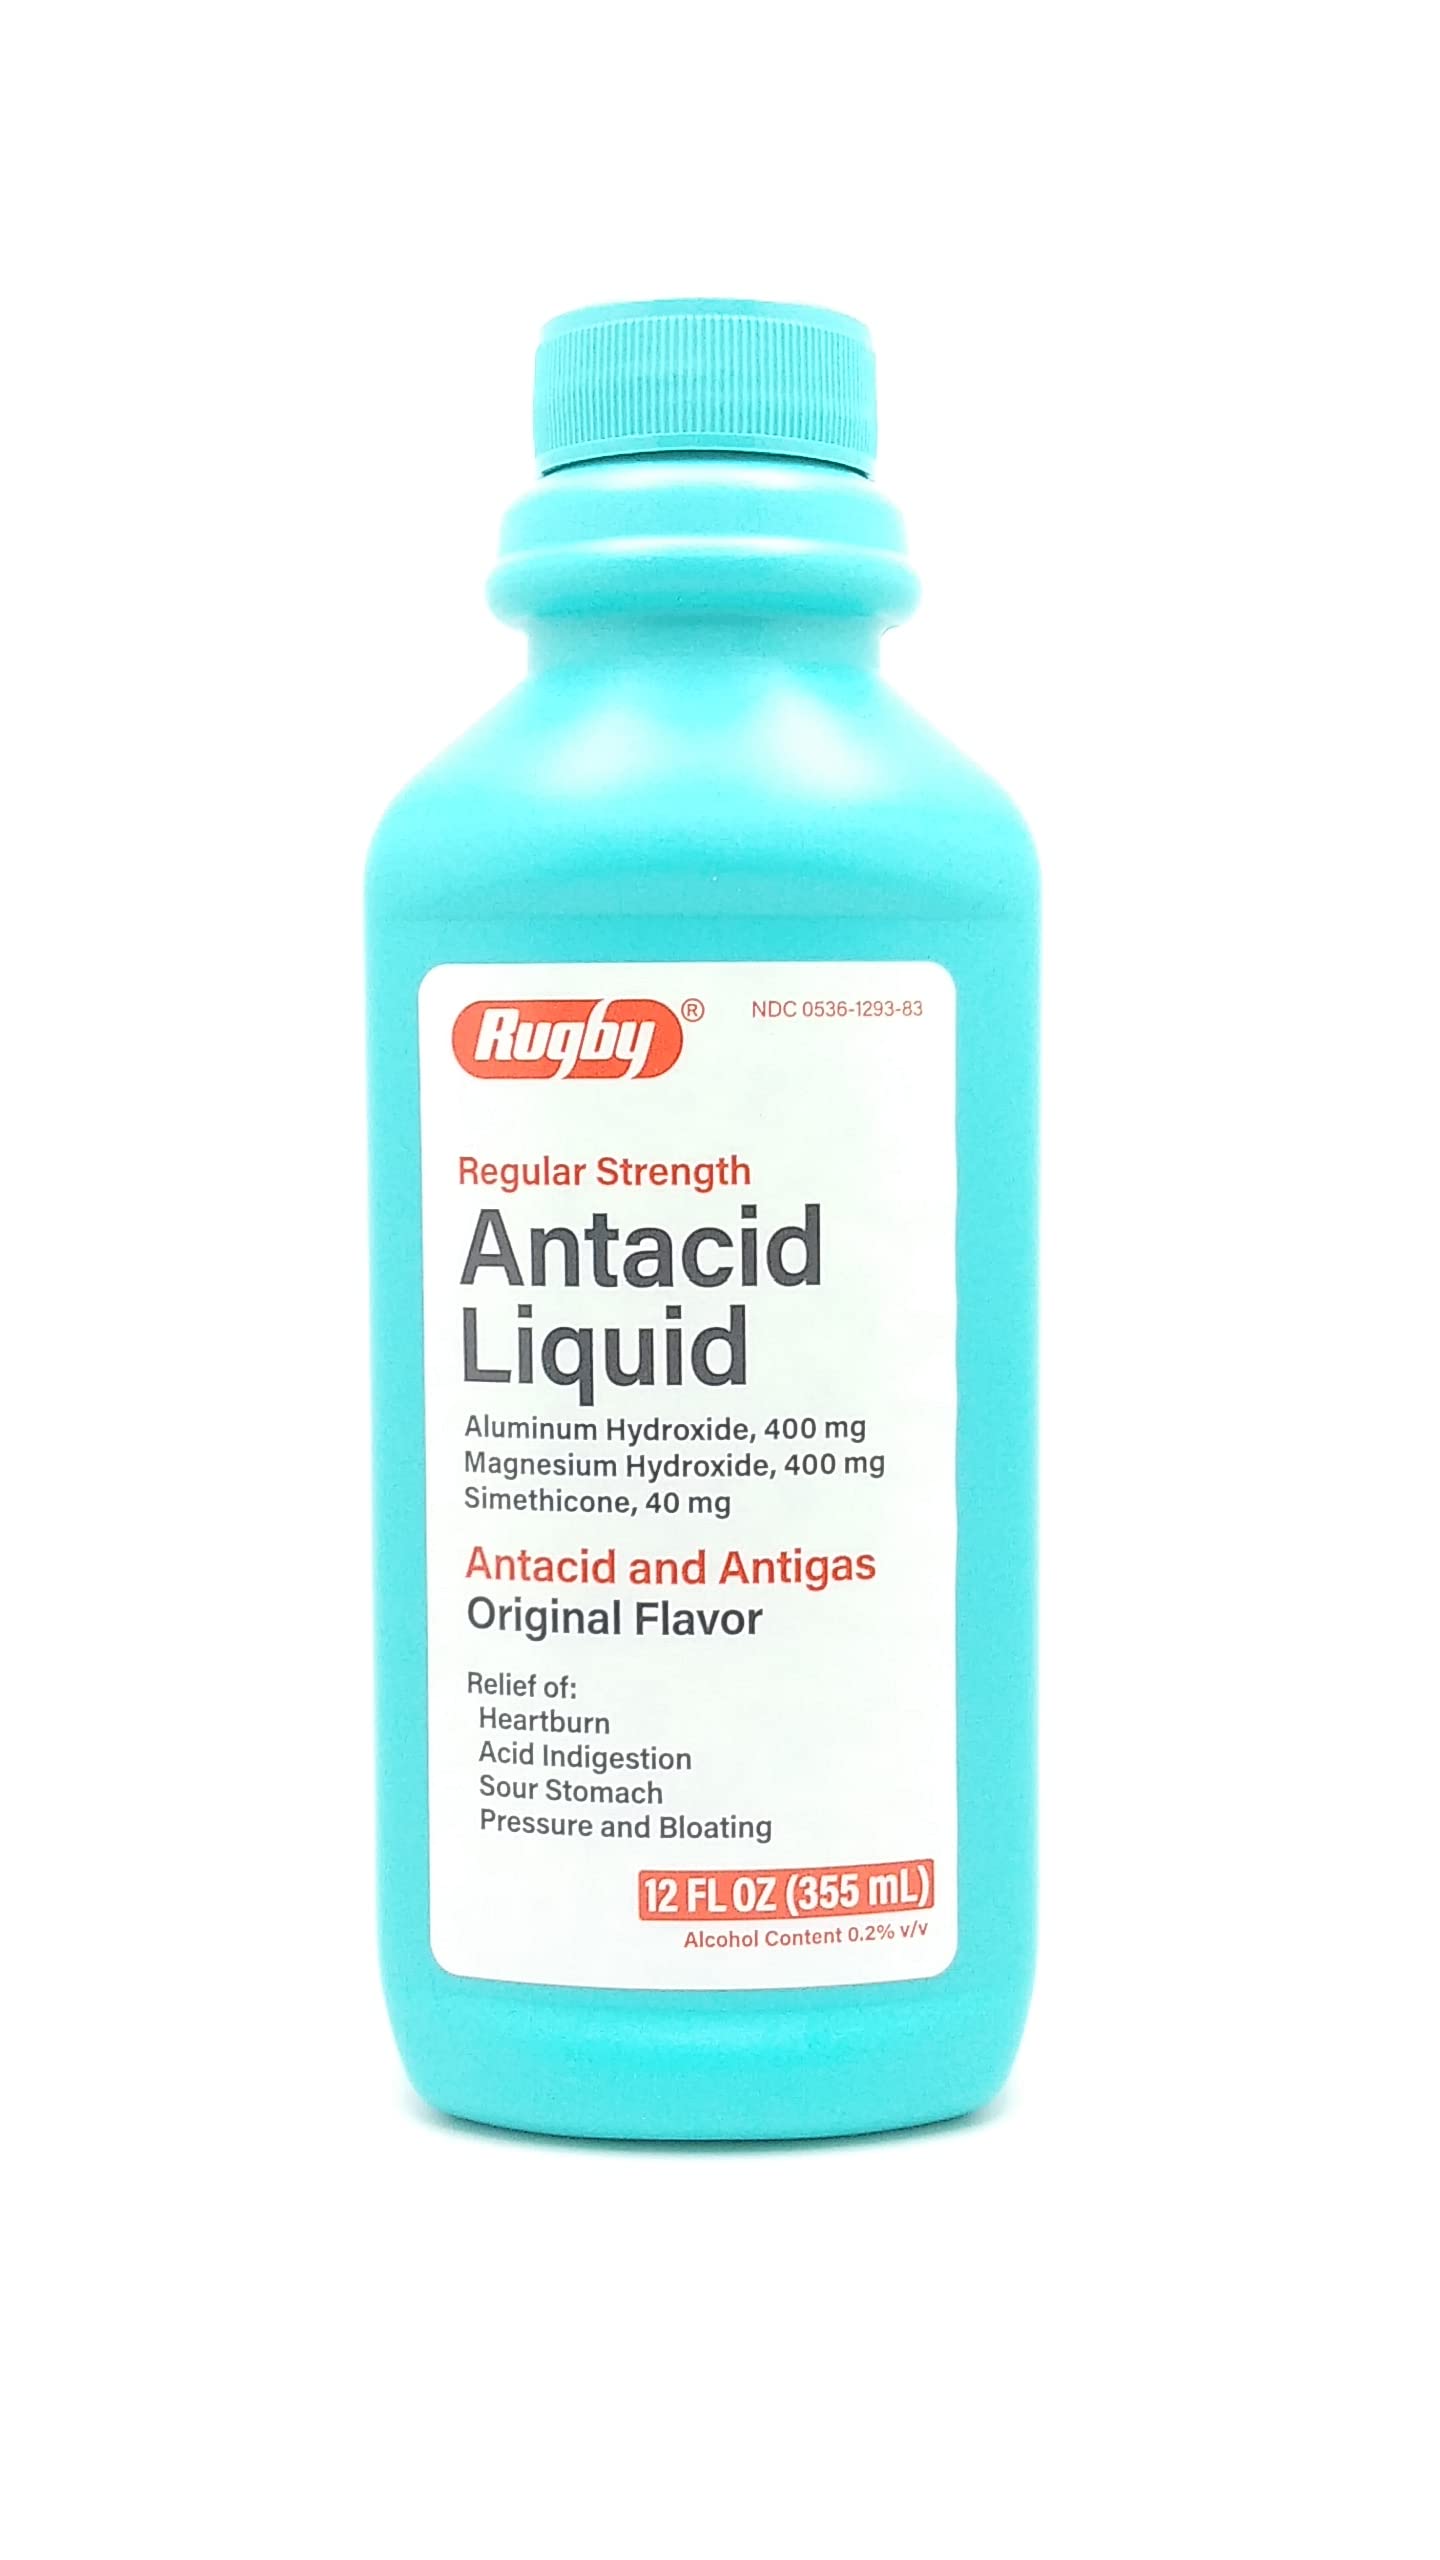 Rugby Laboratories Antacid Liquid Regular Strength Aluminum Hydroxide 400 mg Magnesium Hydroxide 400 mg Simethicone 40 mg Antacid and Antigas Original Flavor (Pack of 1)